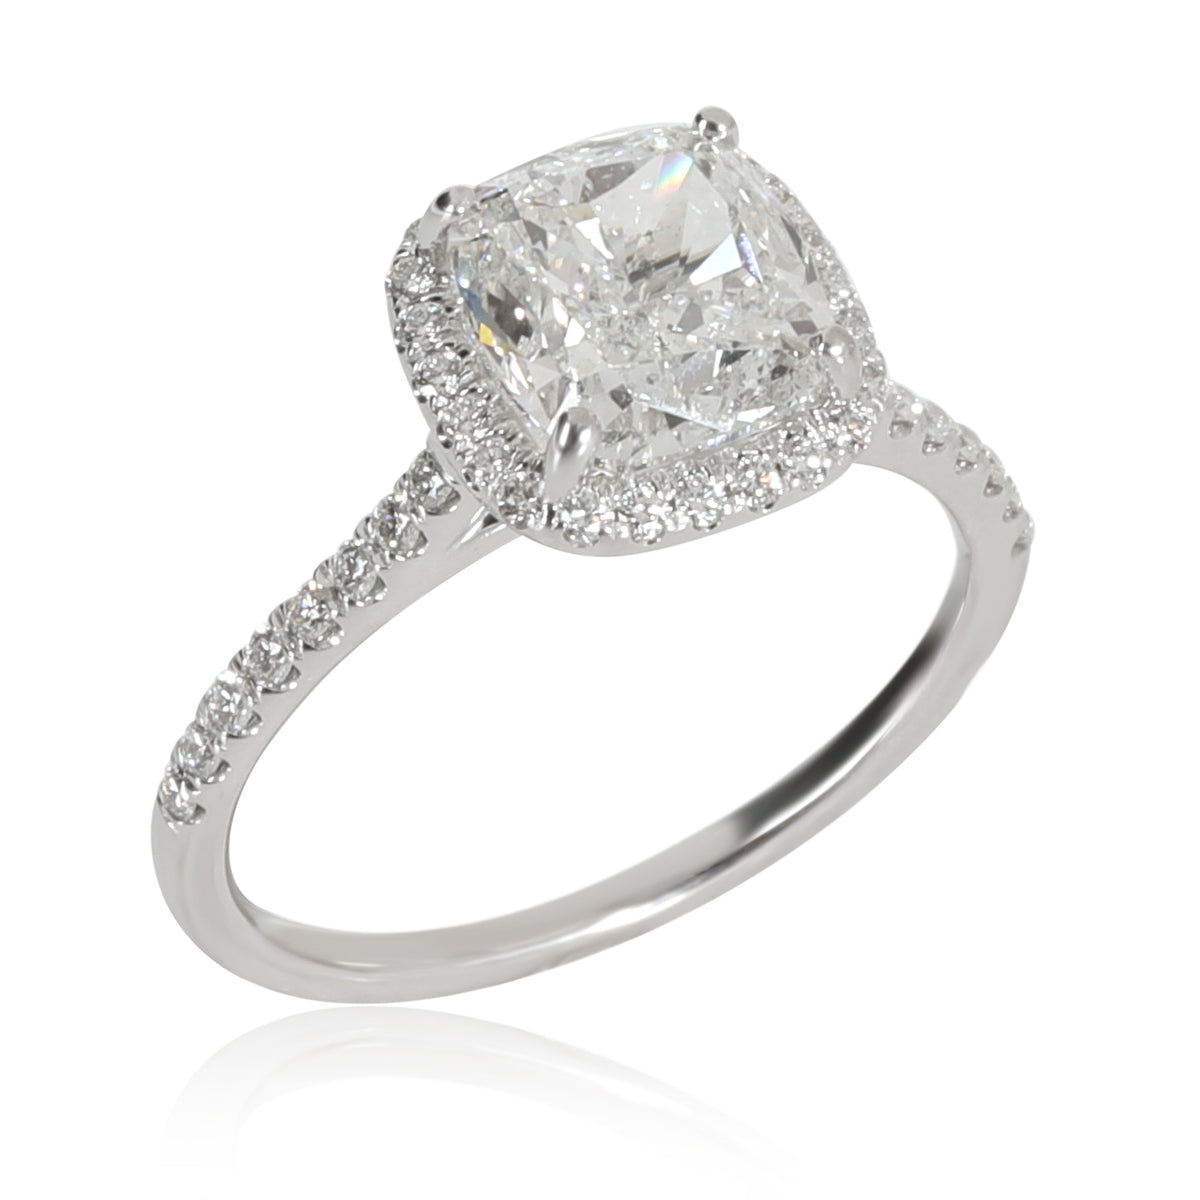 James Allen Cushion Diamond Engagement Ring in 14K White Gold IGI H SI2 2.45 CTW